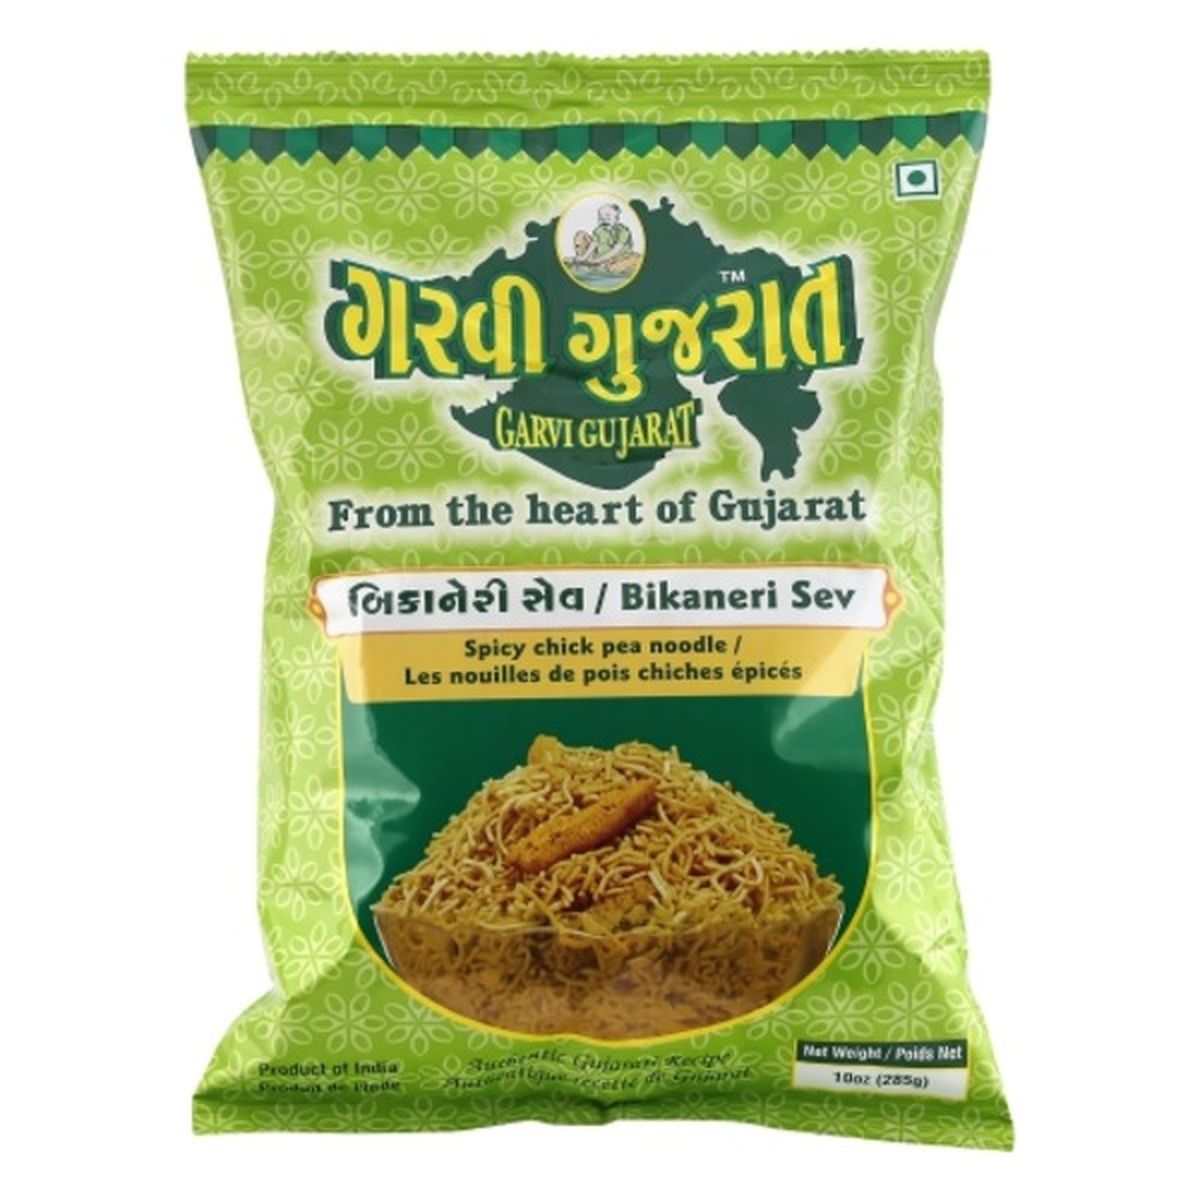 Calories in Garvi Gujarat Noodle, Chick Pea, Spicy